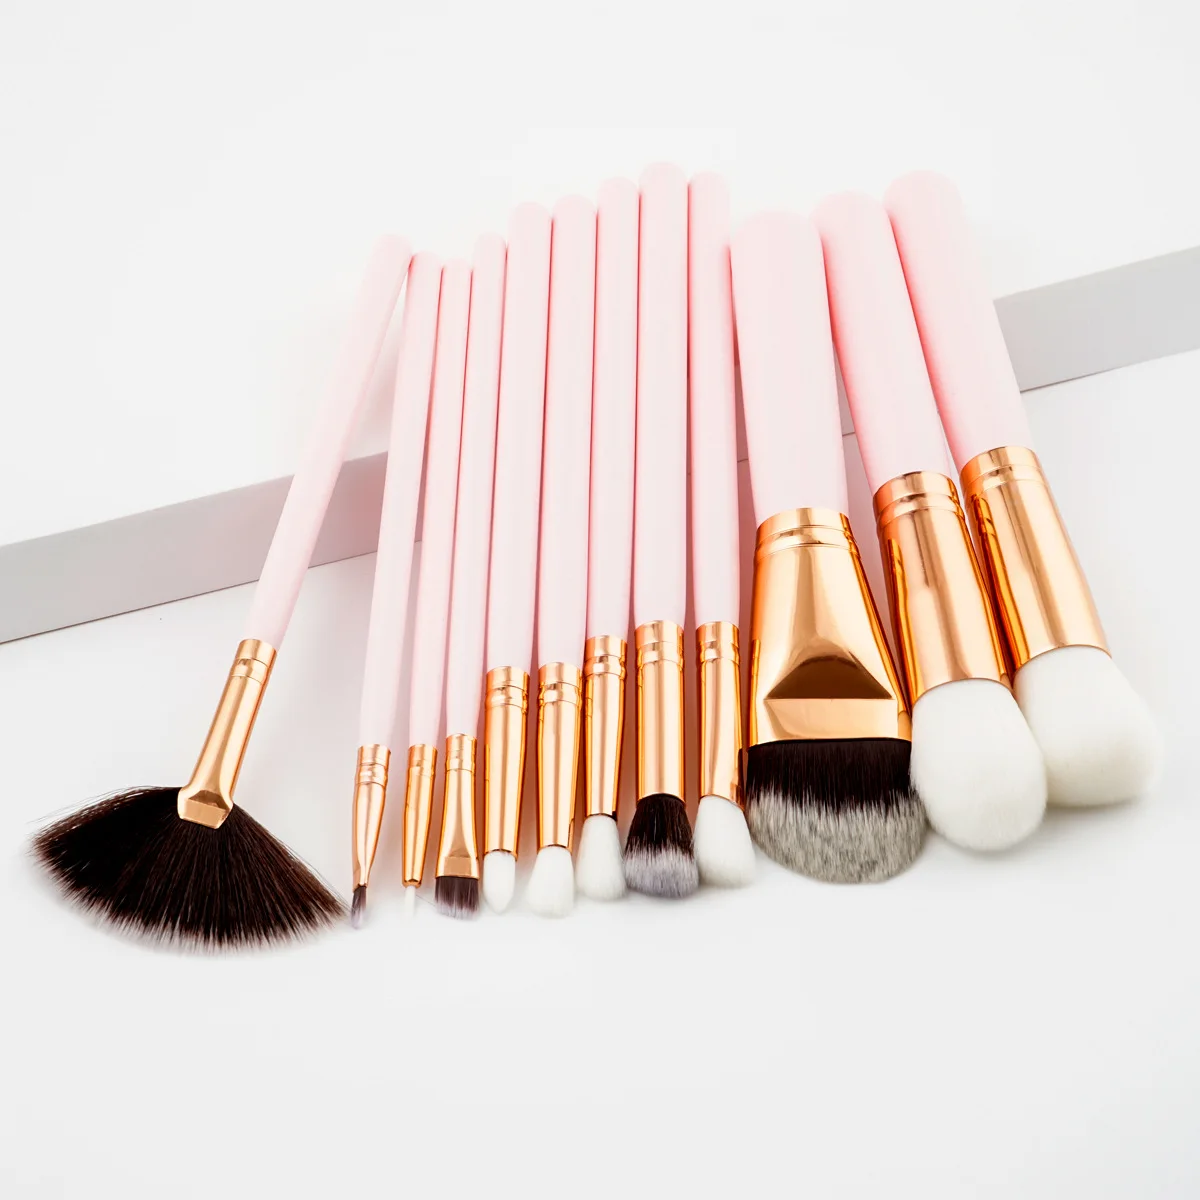 12pcs Professional Makeup Brush Eyeshadow Eyeliner Blending Pencil Beauty Blush Makeup Brush High Quality Cosmetic Tool Kit Pink